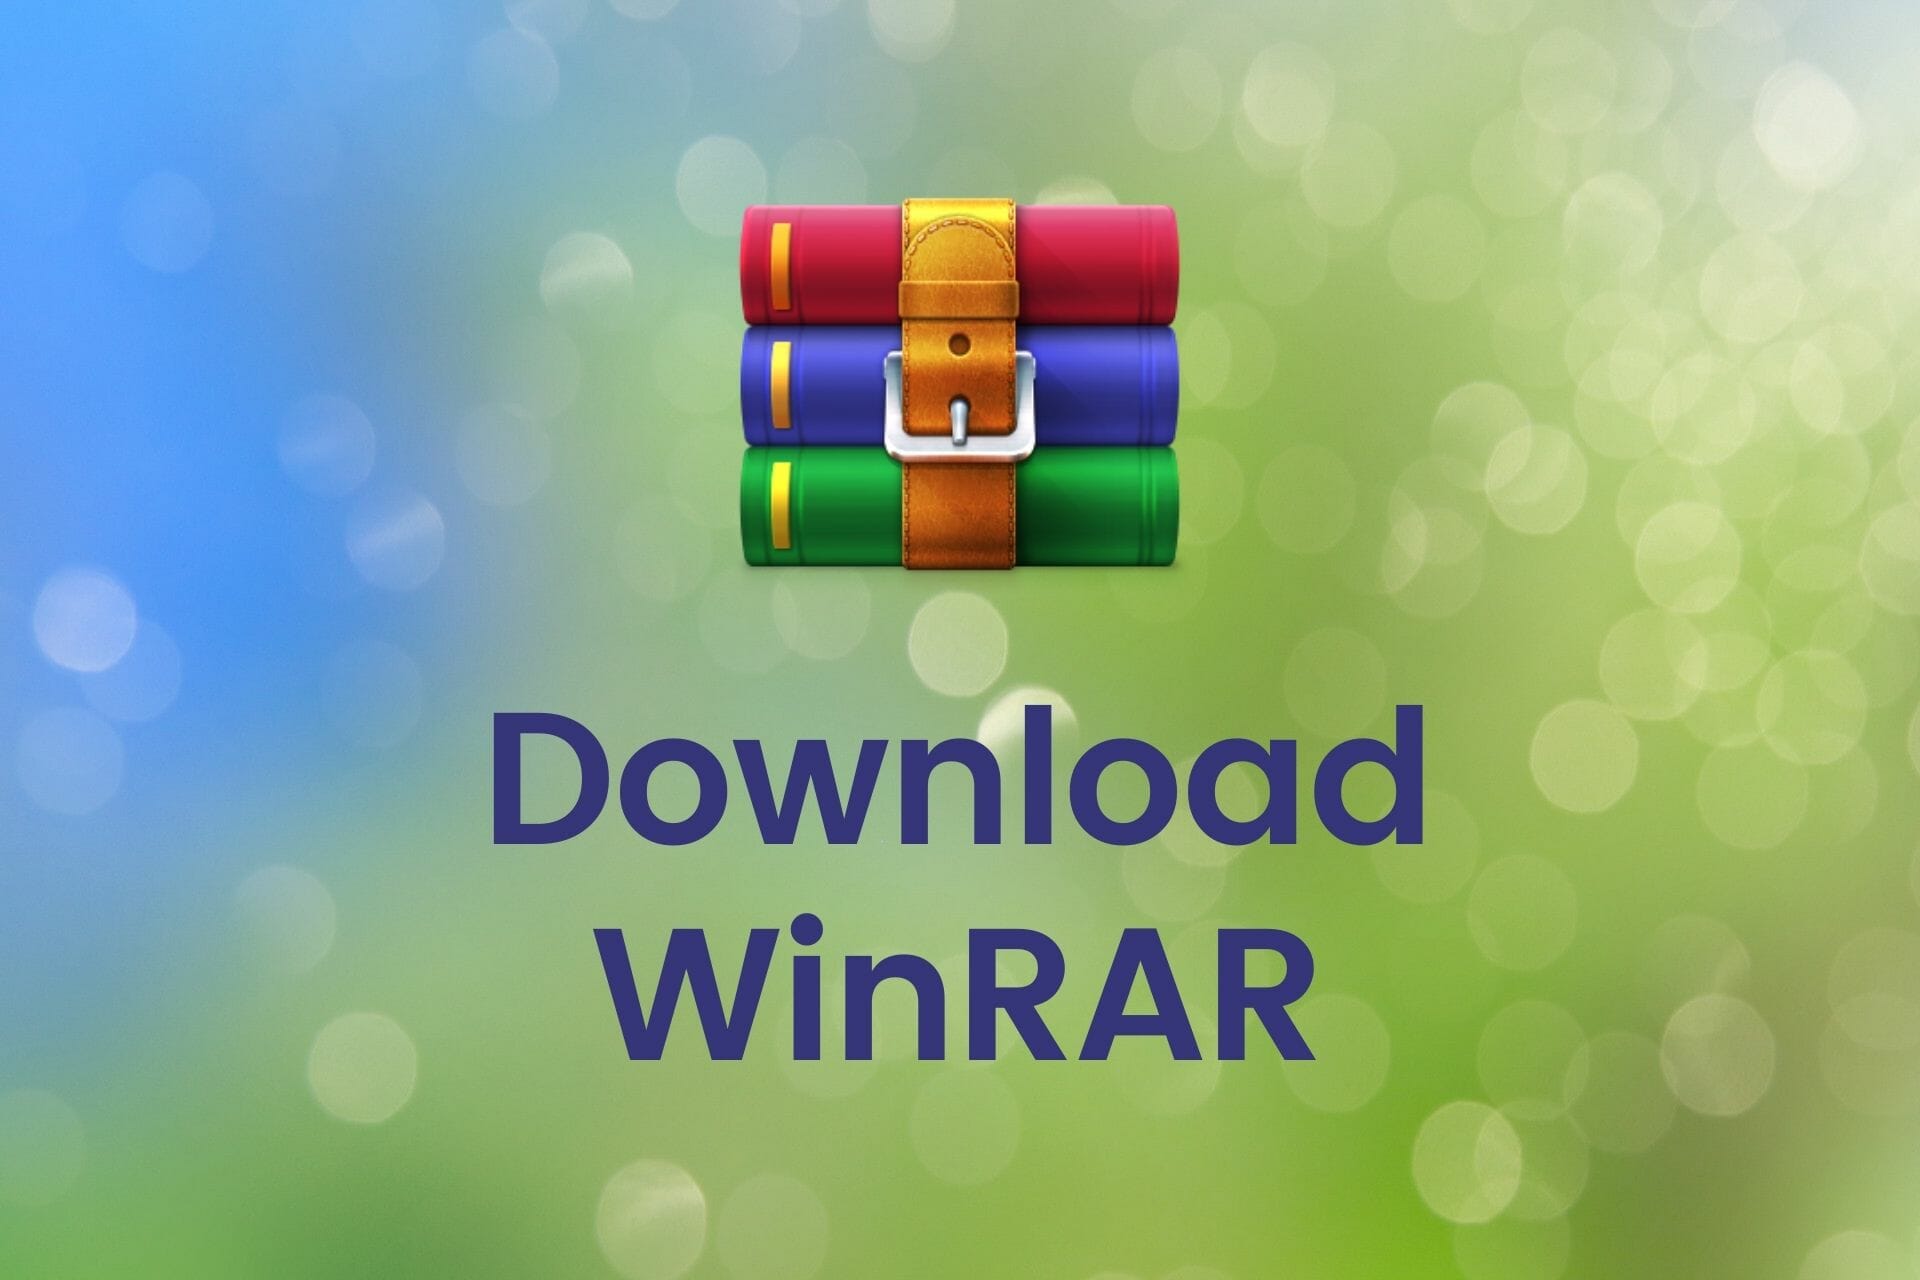 winrar 86 bit windows 7 free download